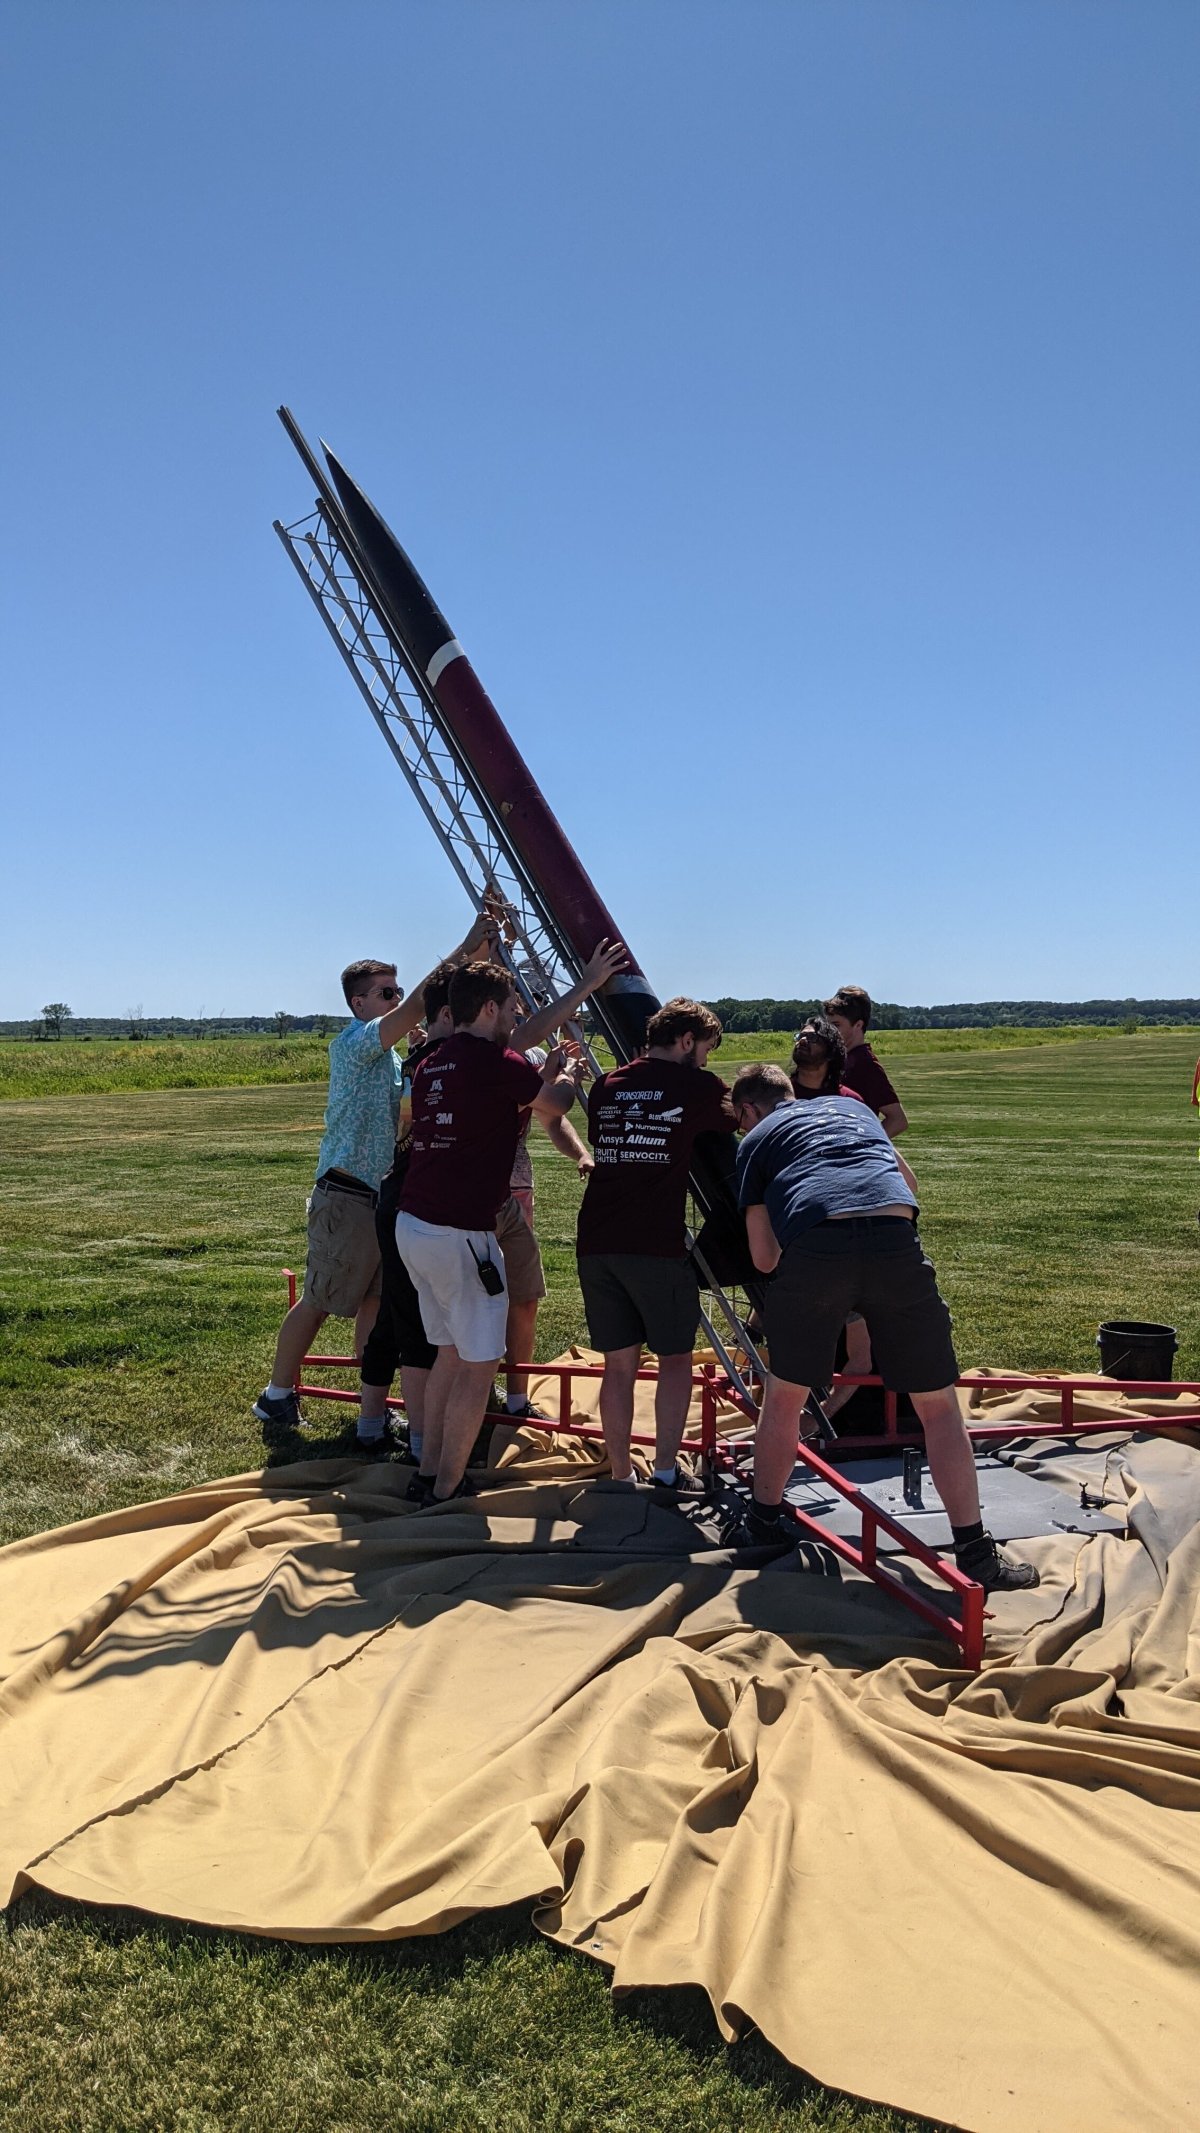 Rocket team raising their rocket